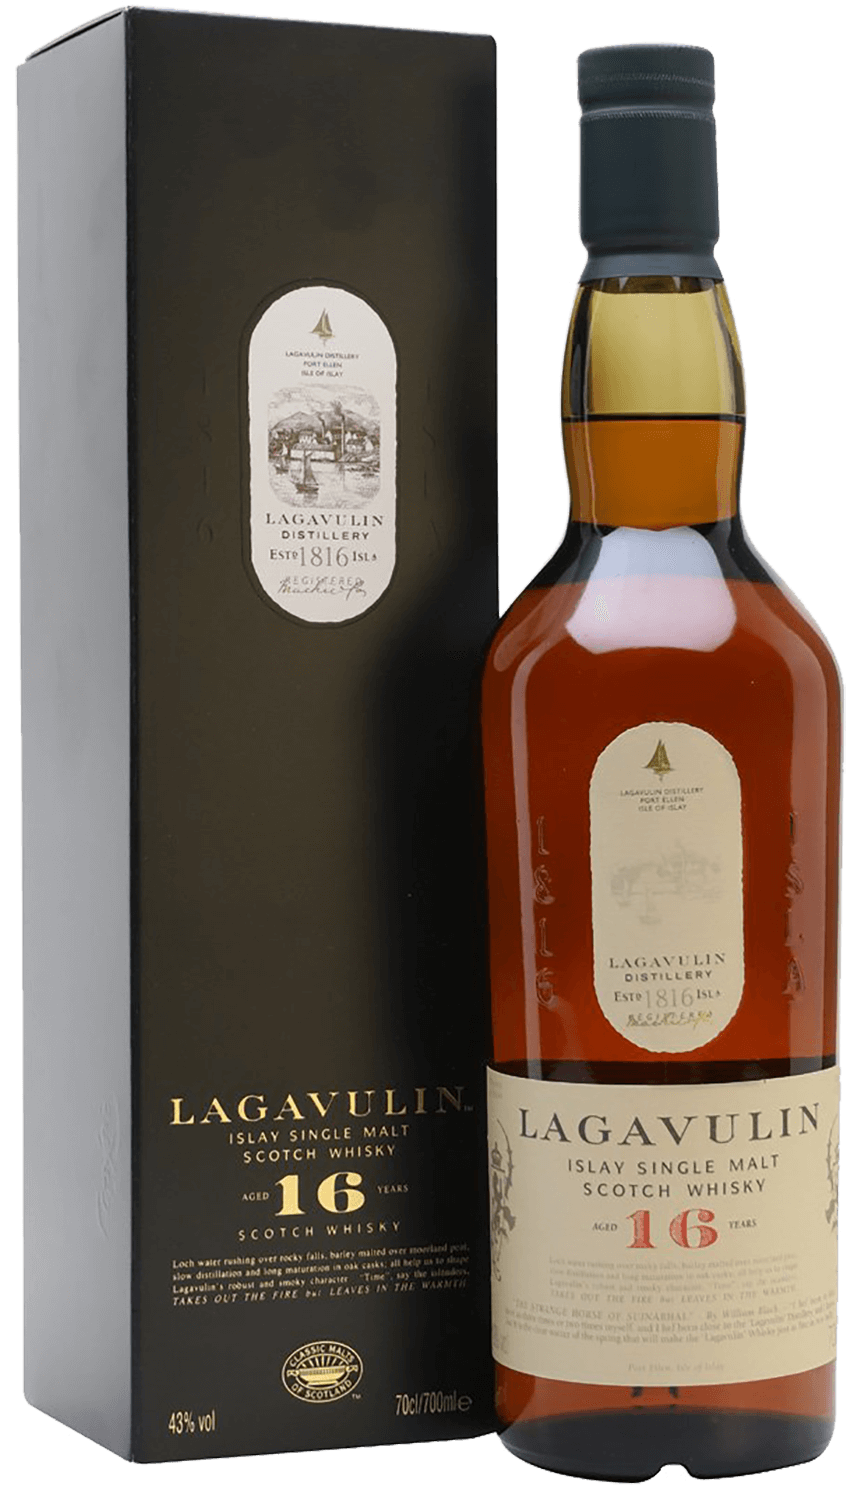 Lagavulin Islay single malt scotch whisky 16 Years Old (gift box) glenfiddich 18 years old single malt scotch whisky gift box